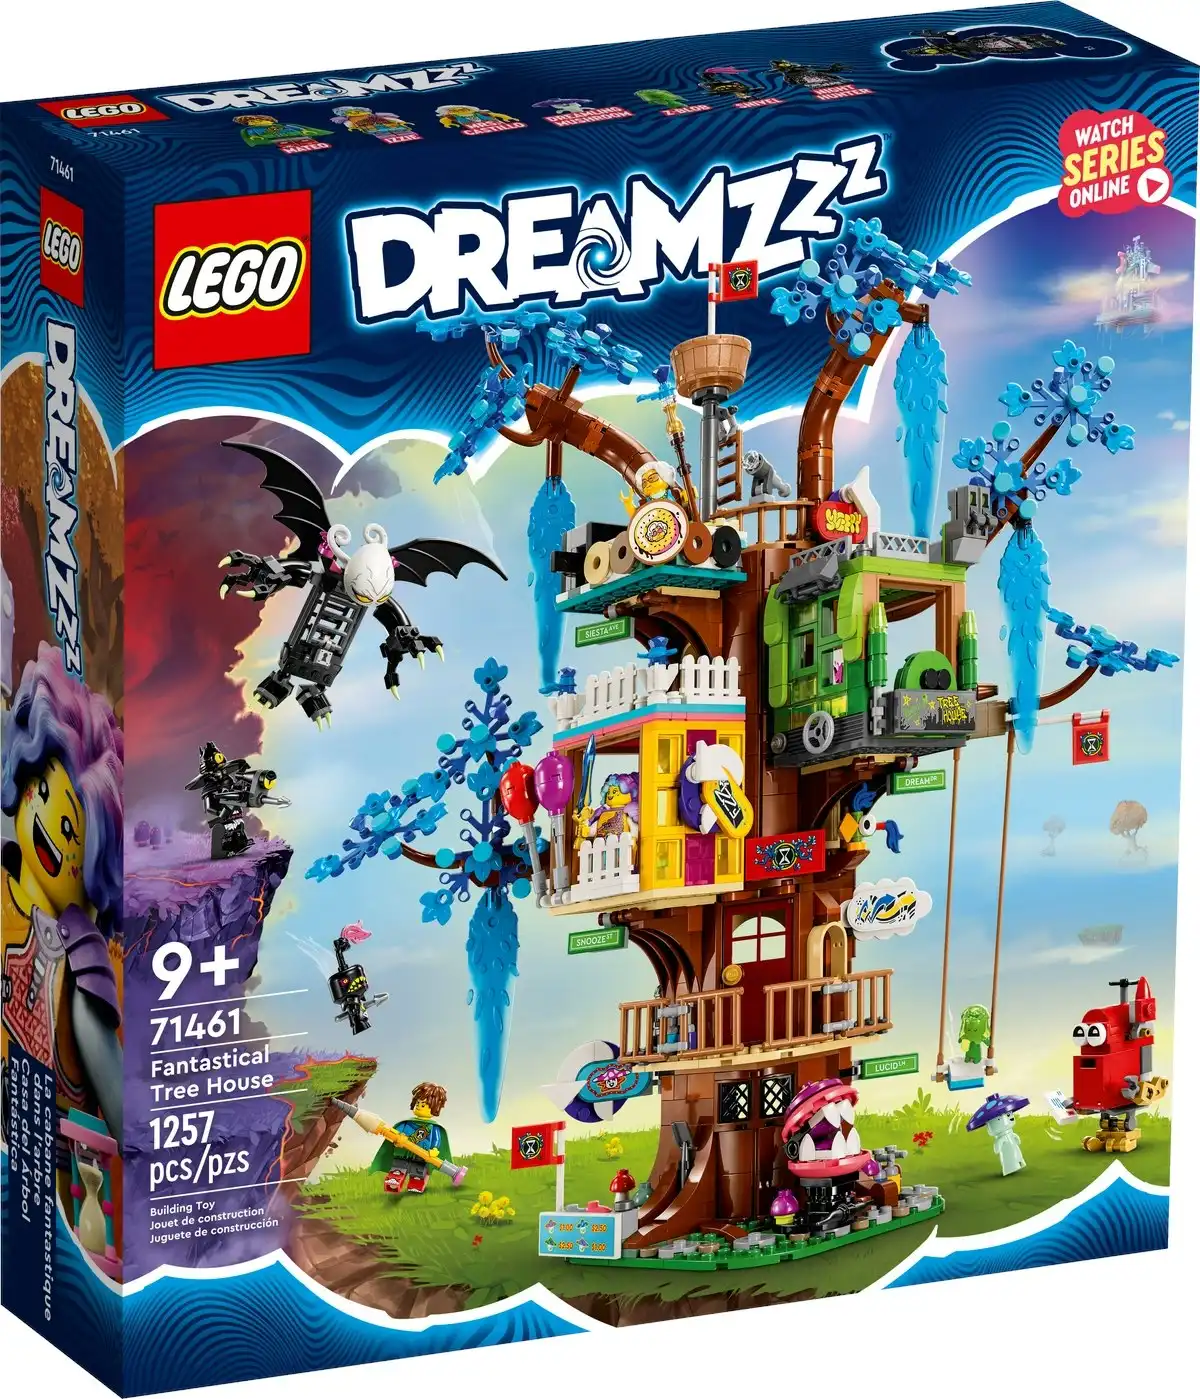 LEGO 71461 Fantastical Tree House - DreamZzz